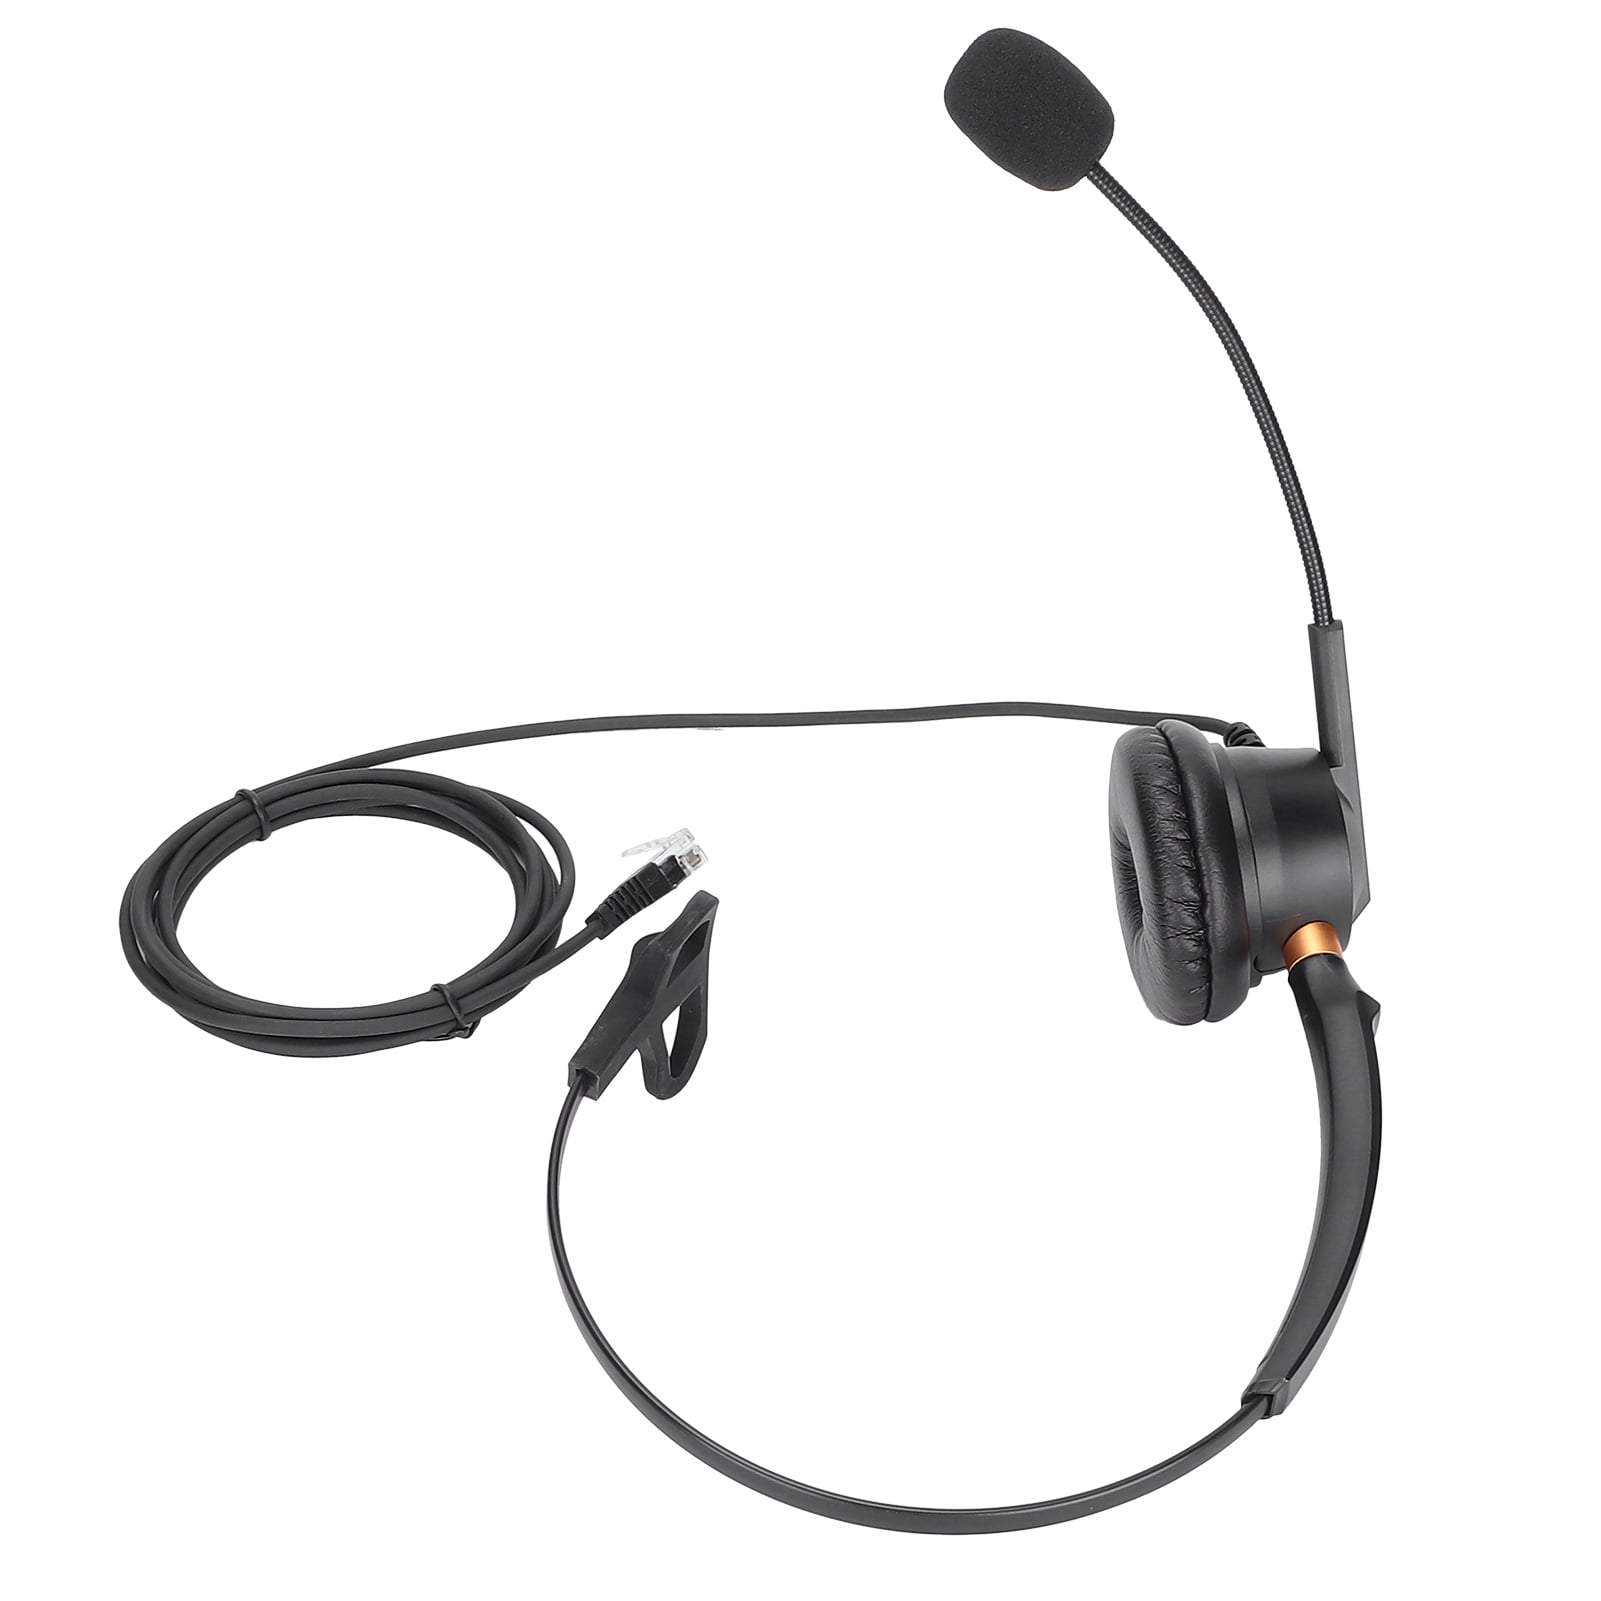 Beige Single Earhook earhang with 4 pin Mini XLR Connector for Wireless Shure transmitters. SoundThatOut Shu-S01 Headset Microphone 